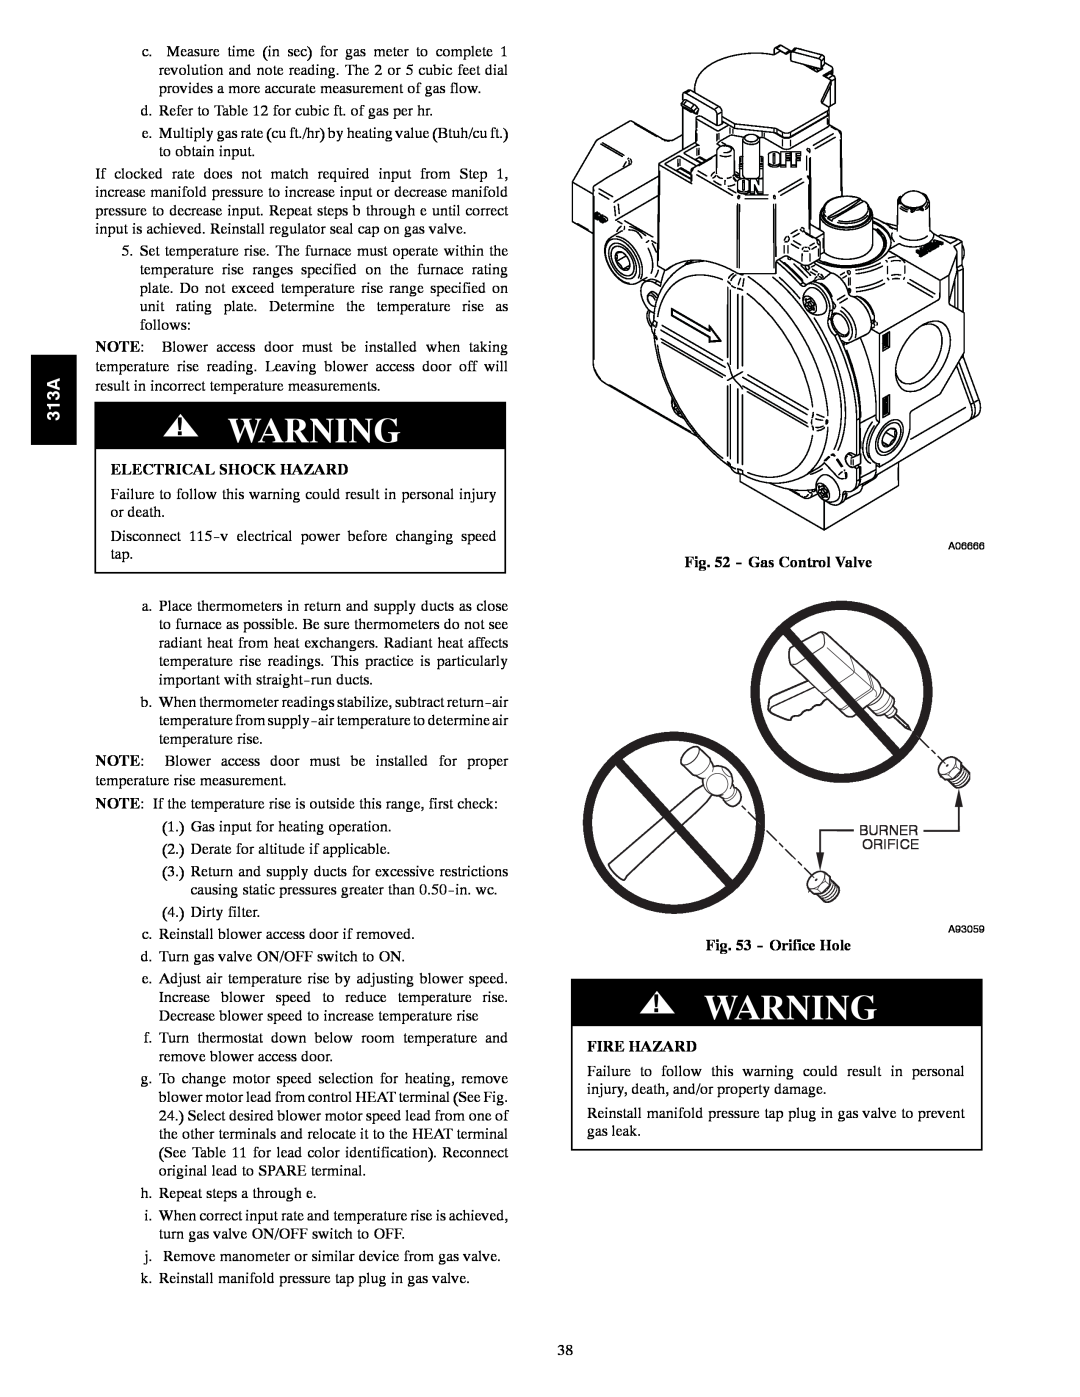 Bryant 313AAV instruction manual Electrical Shock Hazard, Gas Control Valve, Orifice Hole, Fire Hazard 